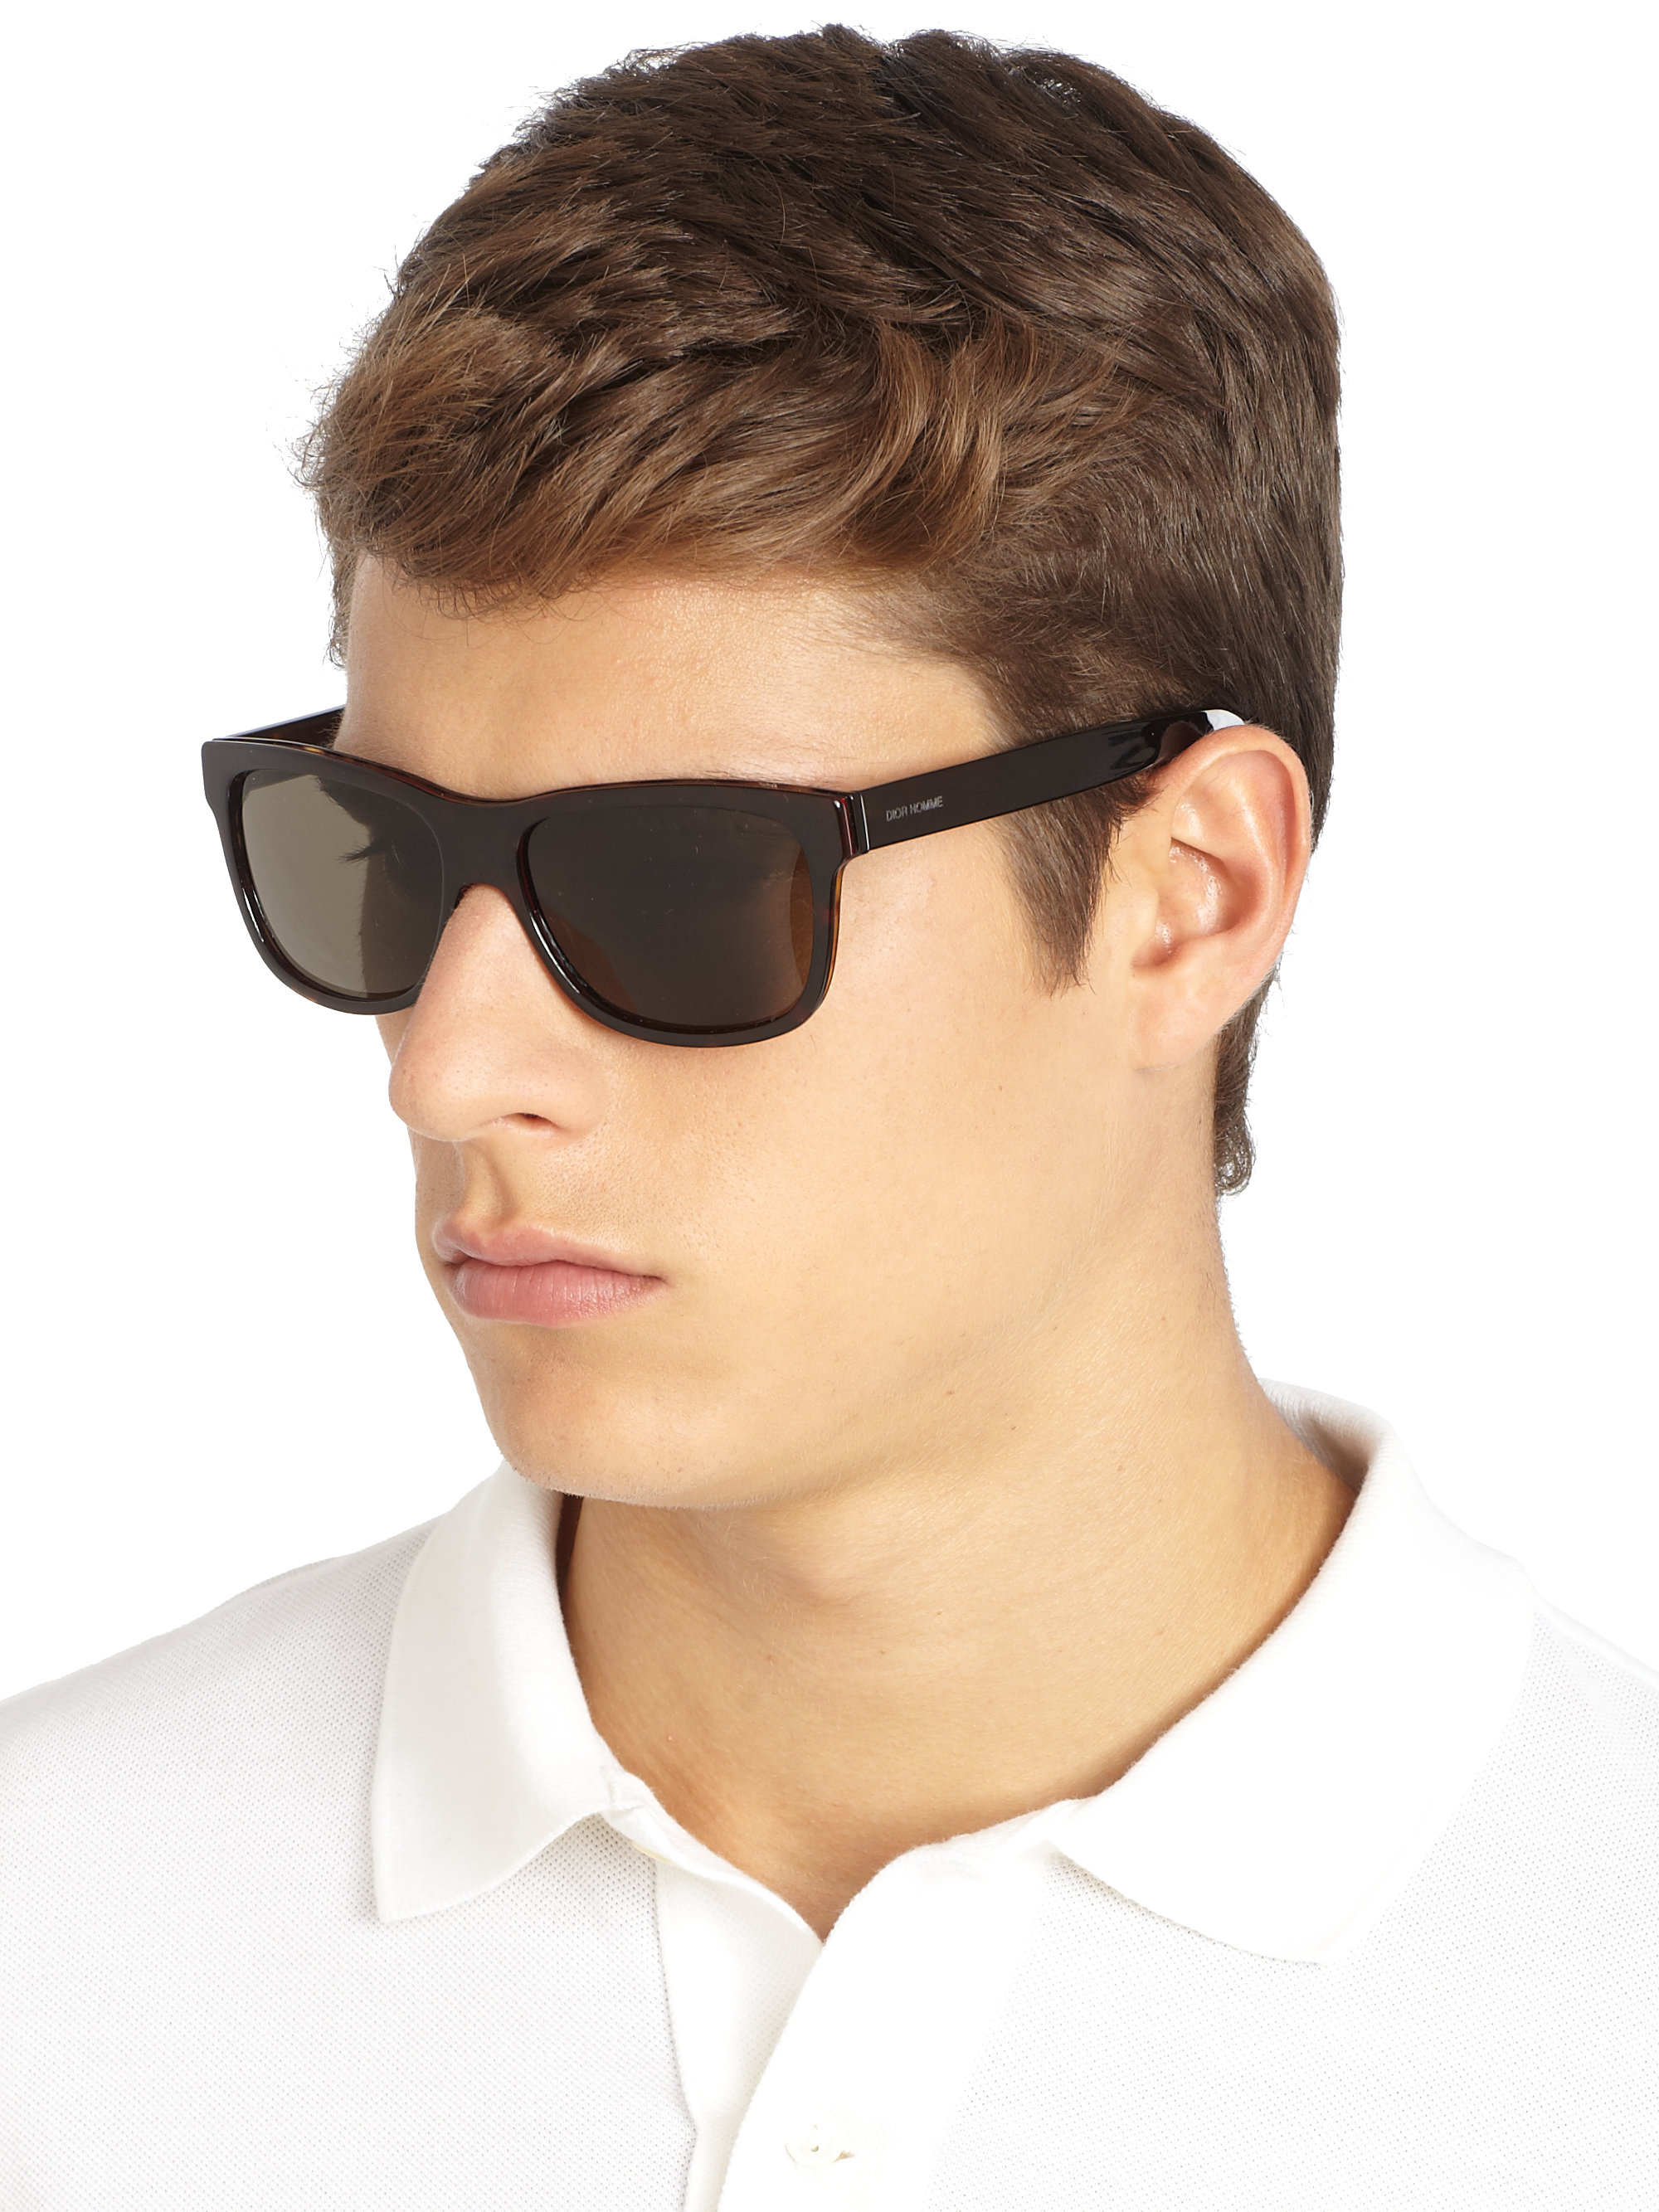 dior wayfarer sunglasses